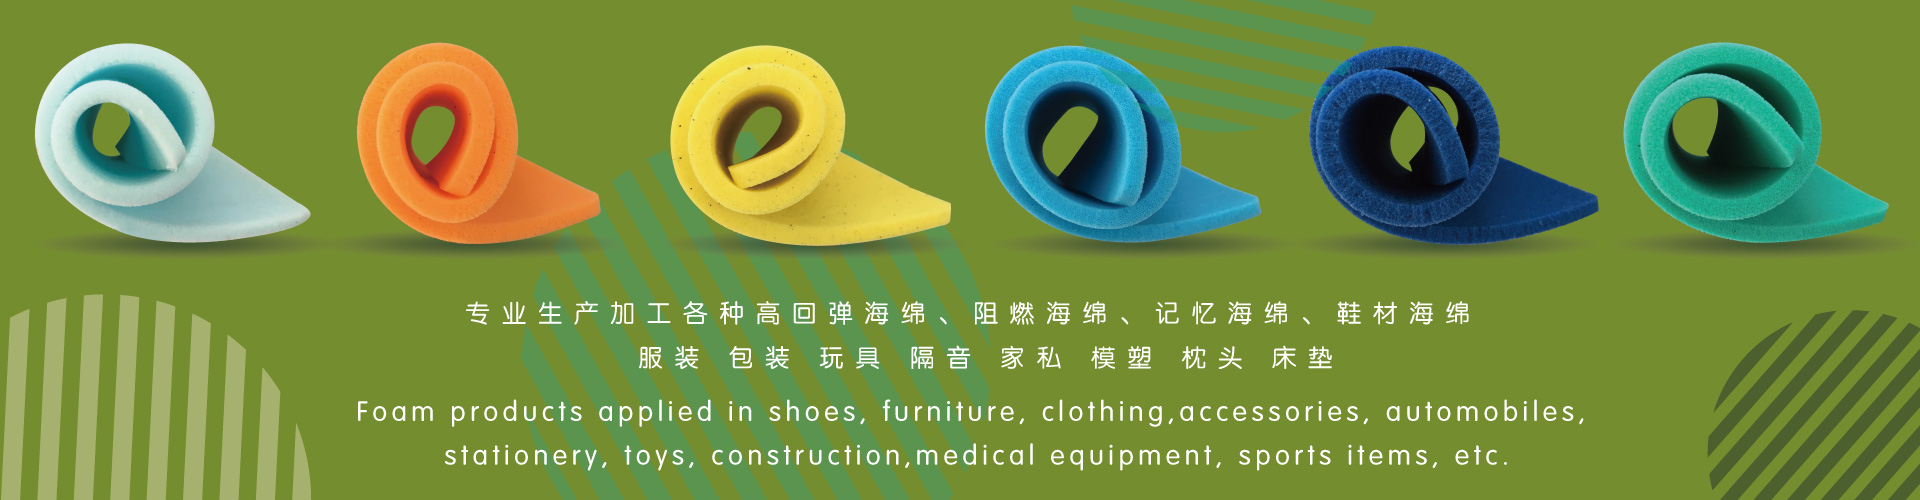 Zhejiang Sothinks Technology Co., Ltd..jpg